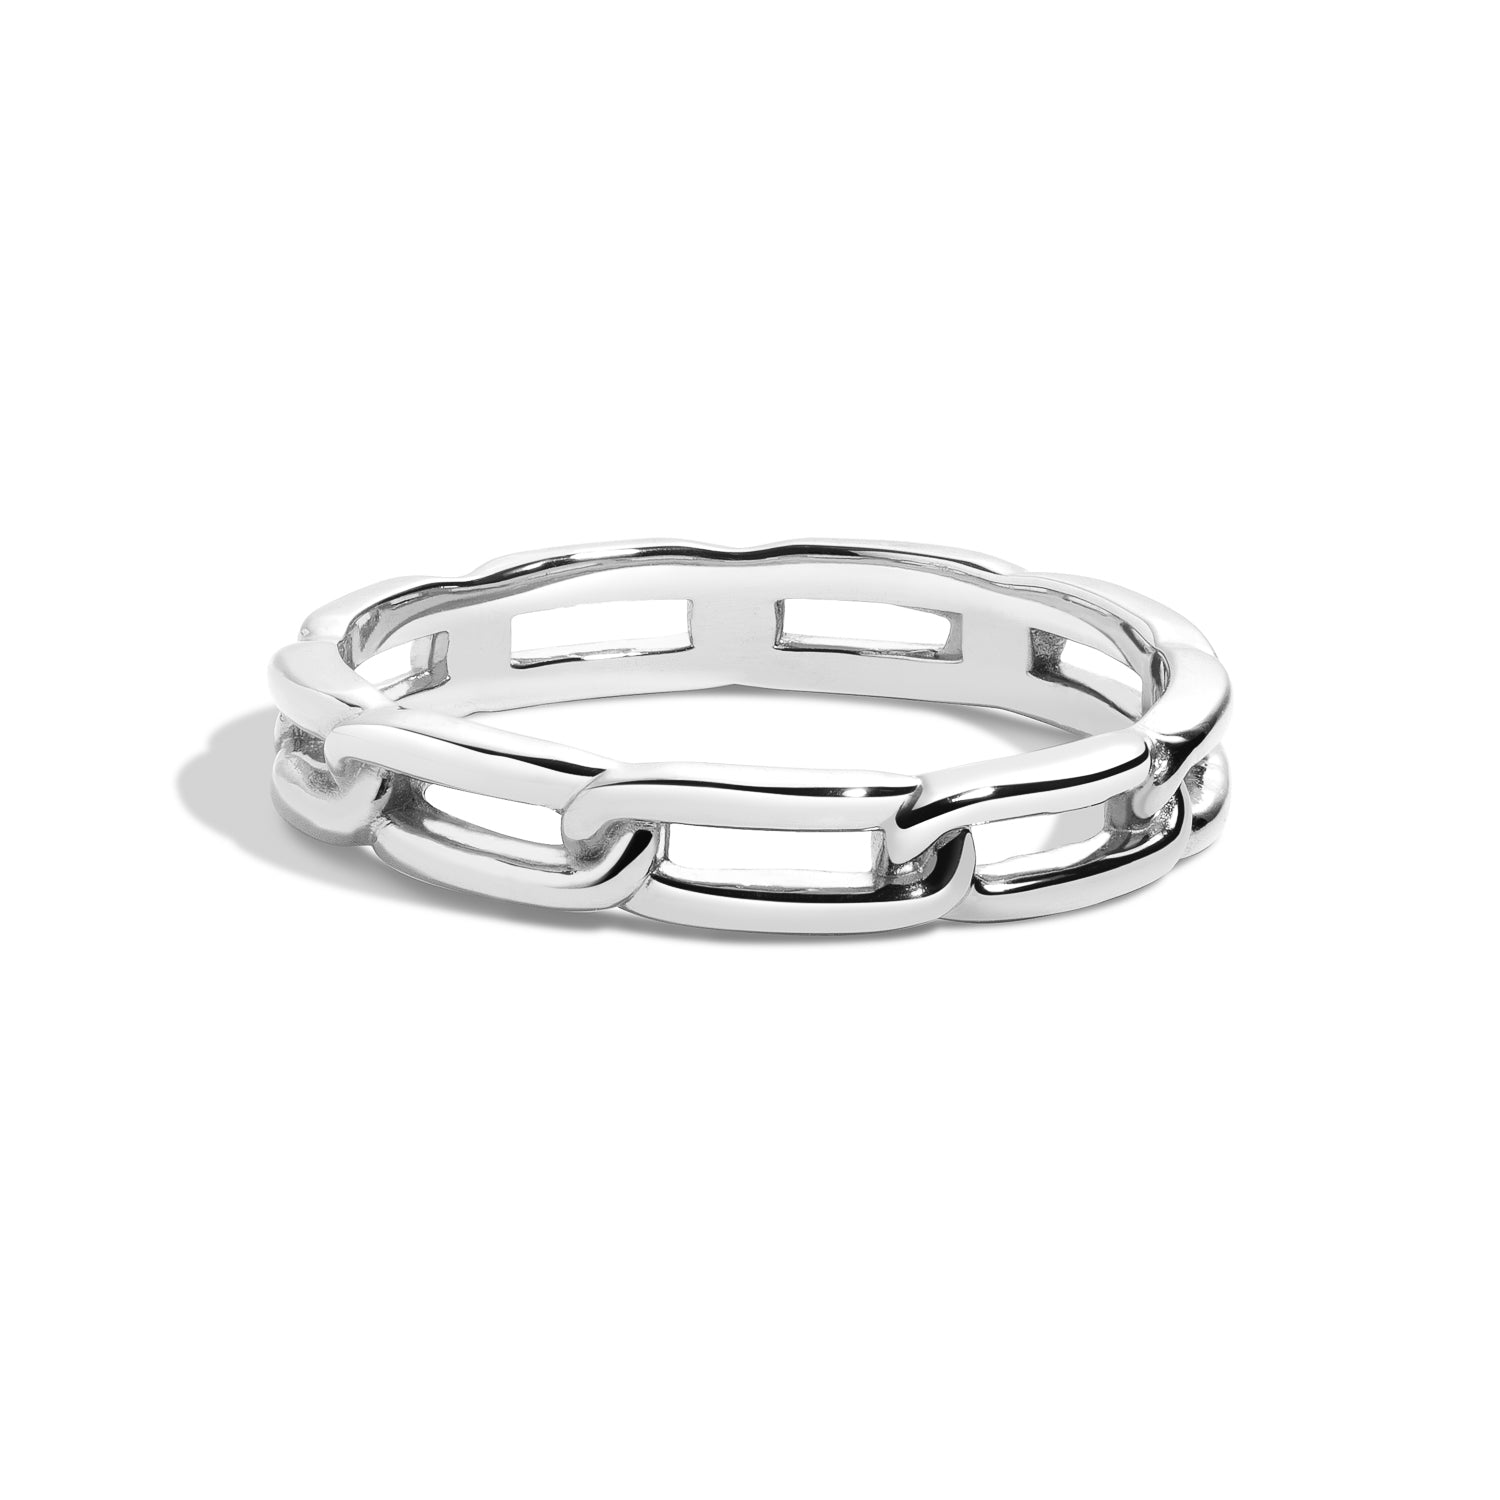 Shahla Karimi Jewelry Chain Link Ring No.2 14K White Gold